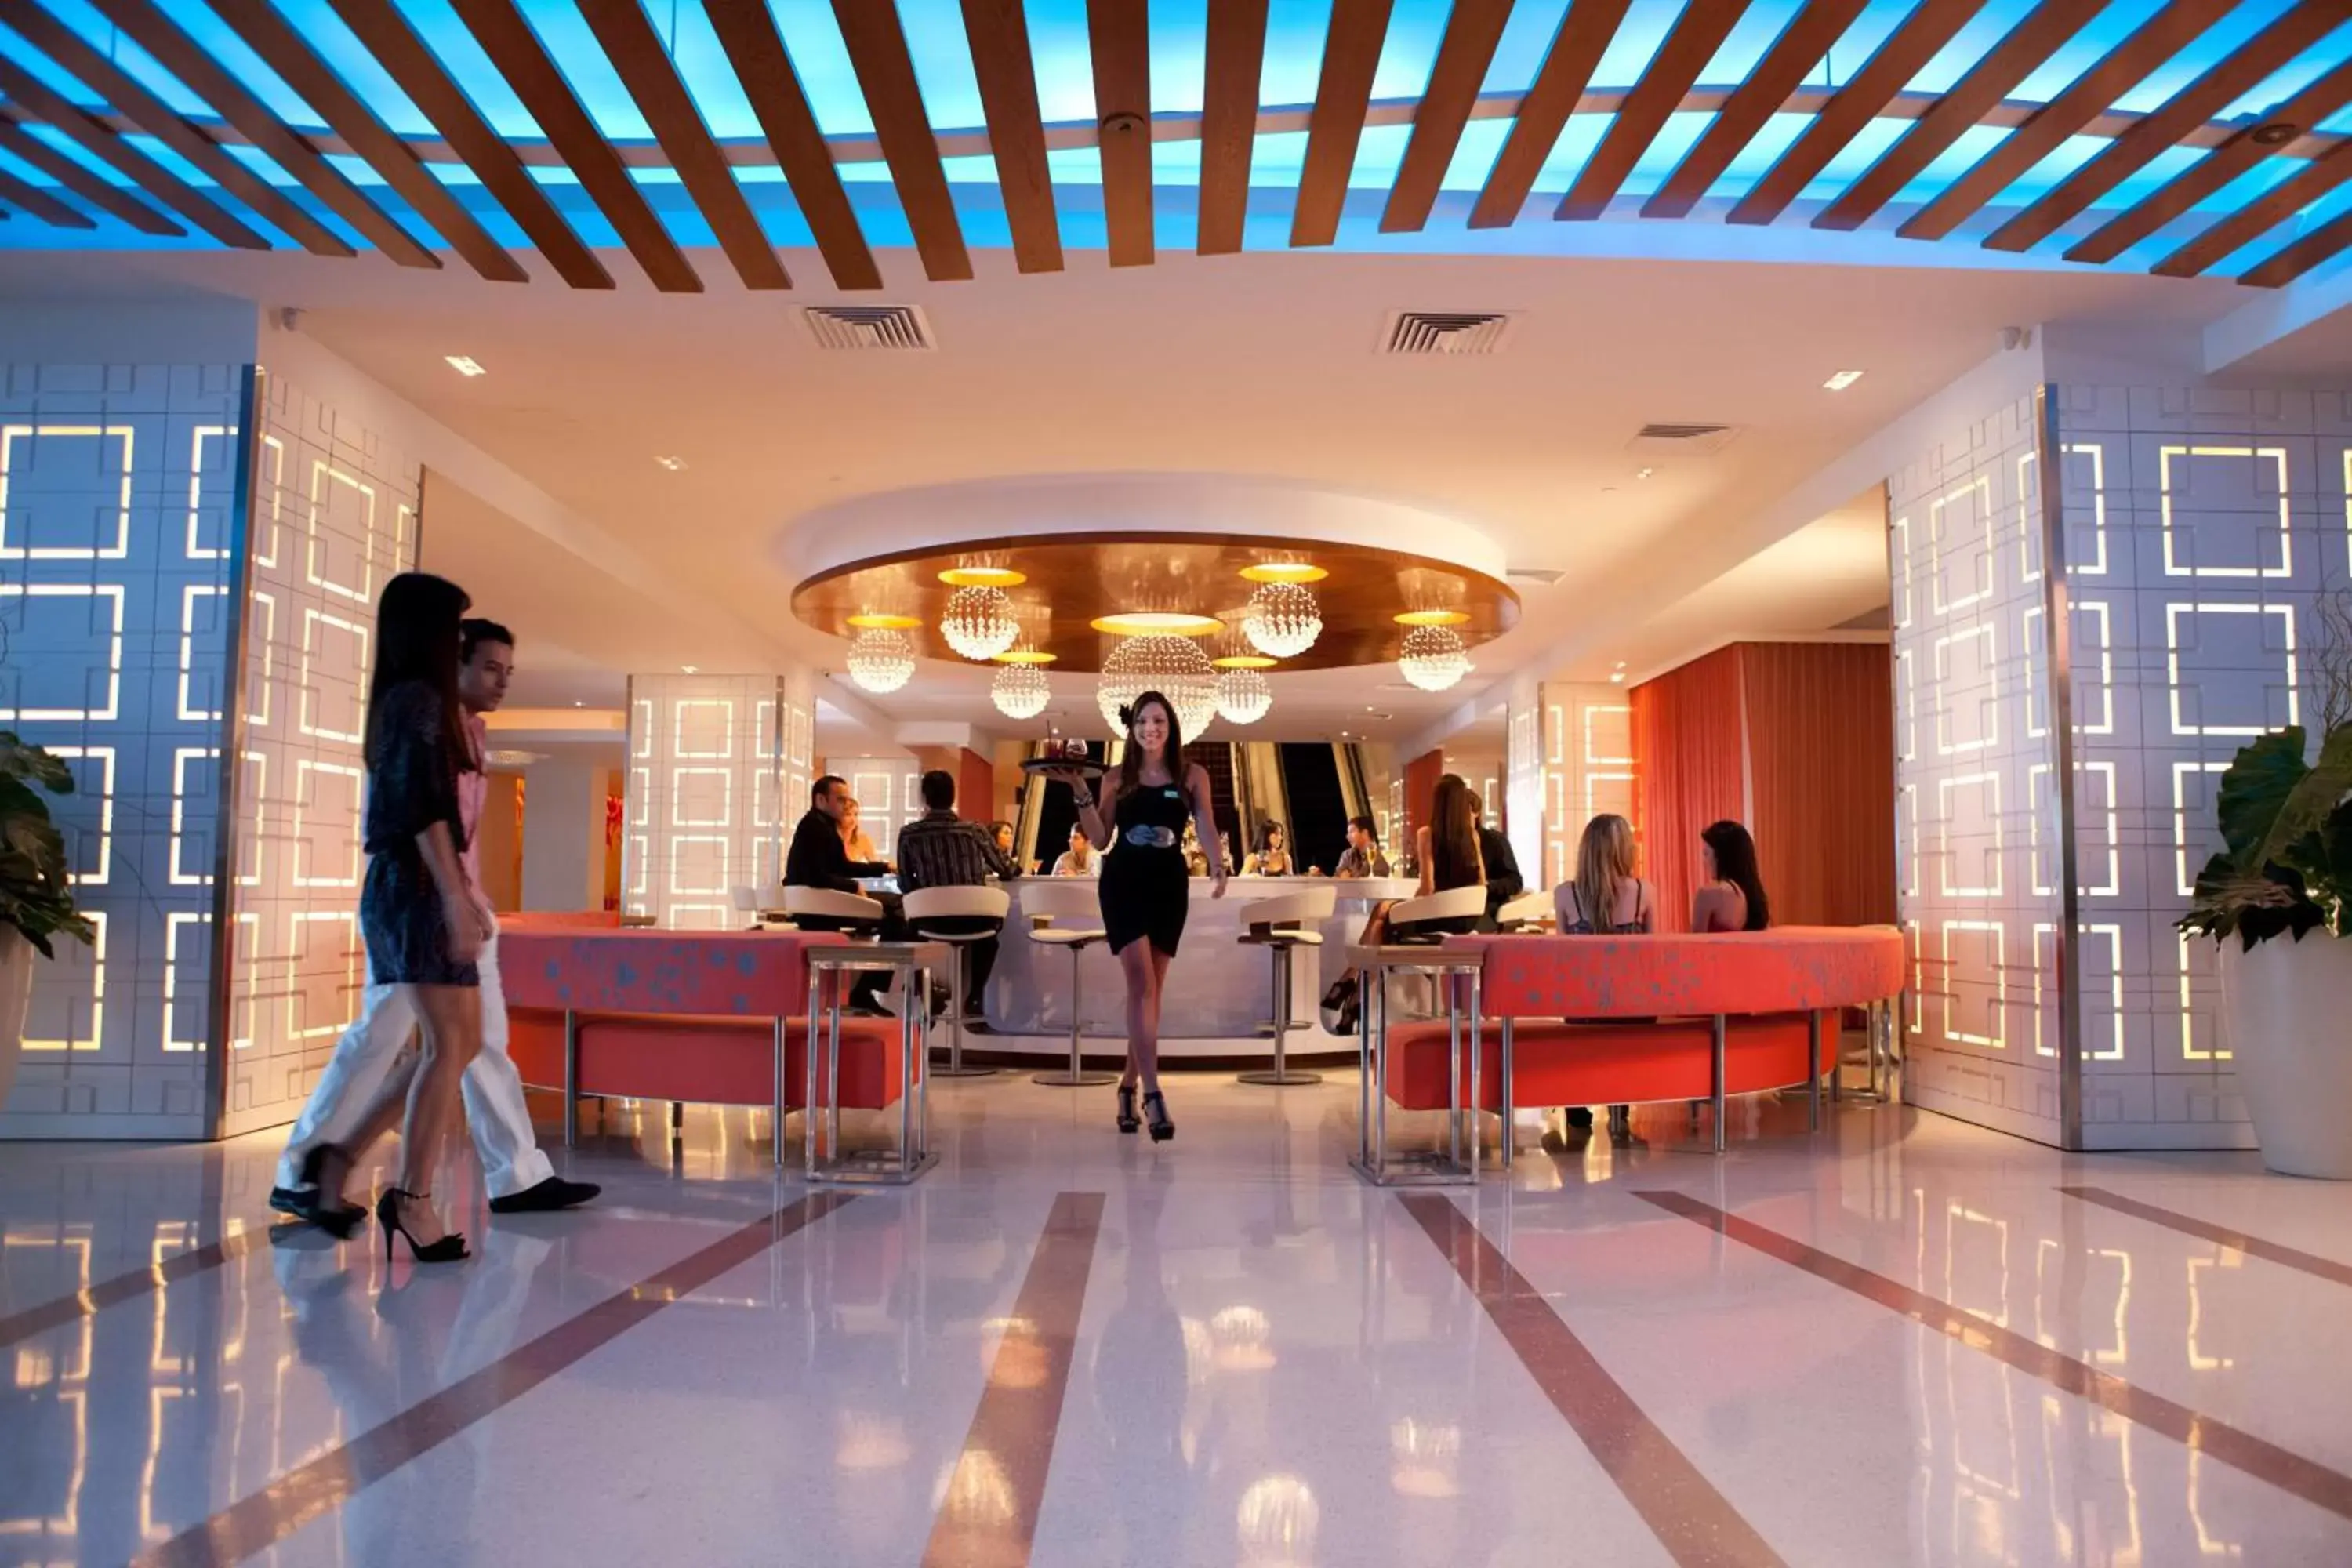 Lobby or reception in The Condado Plaza Hilton